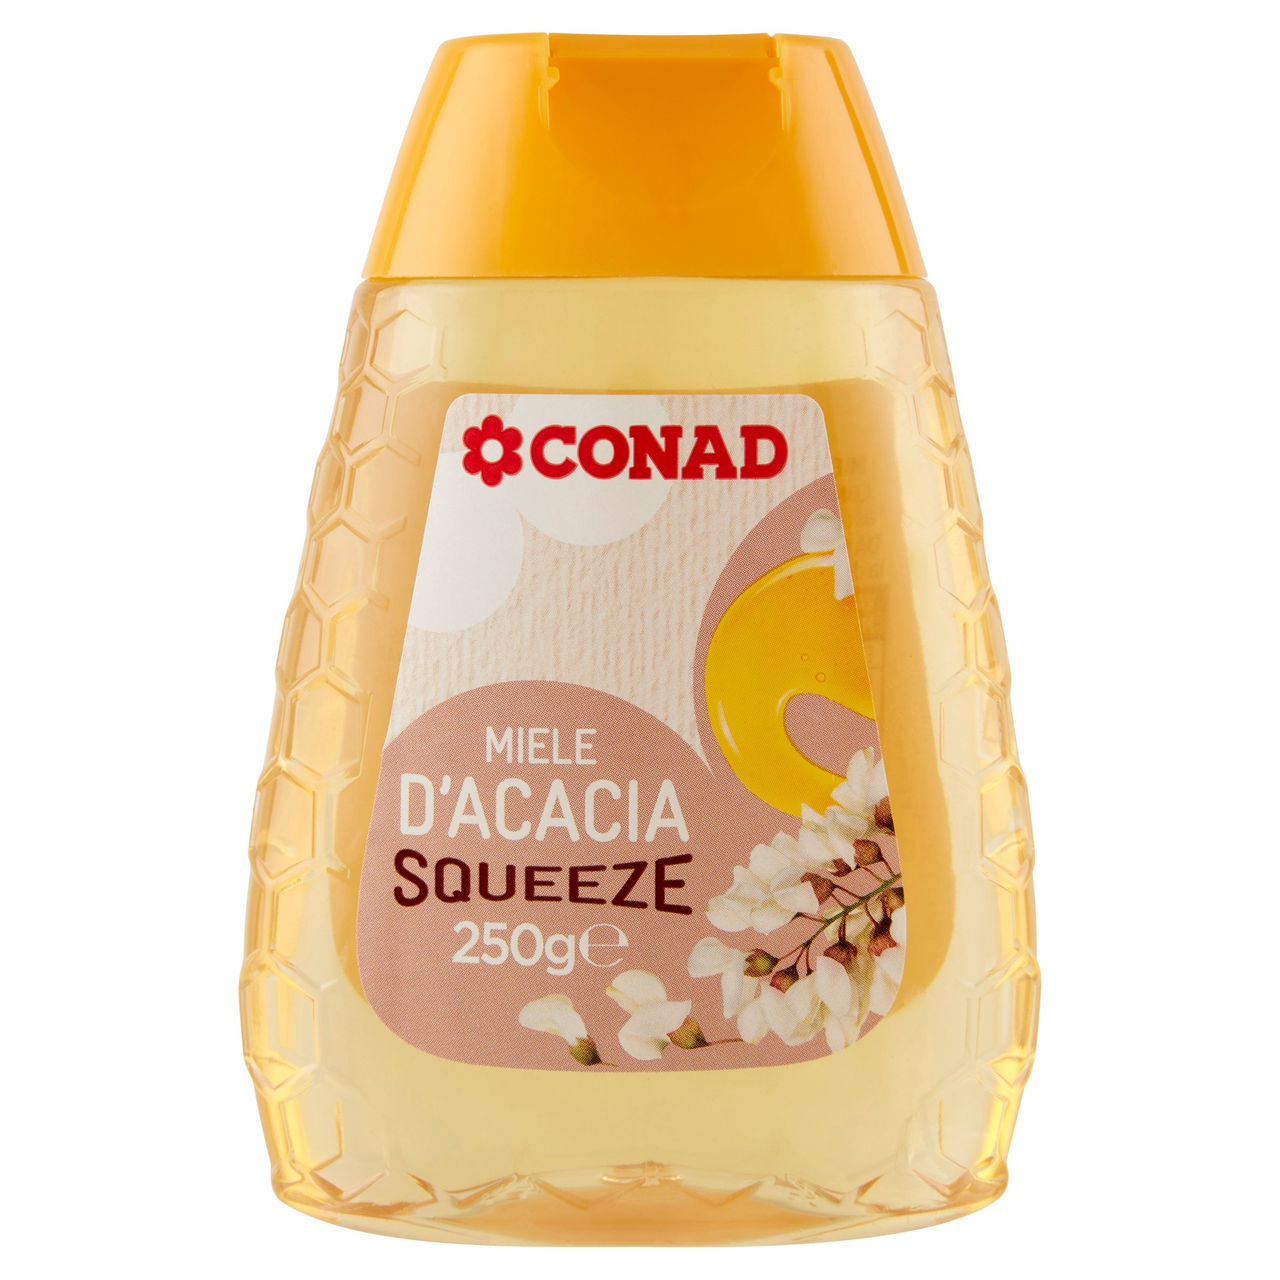 Miele d'Acacia Squeeze 250 g Conad